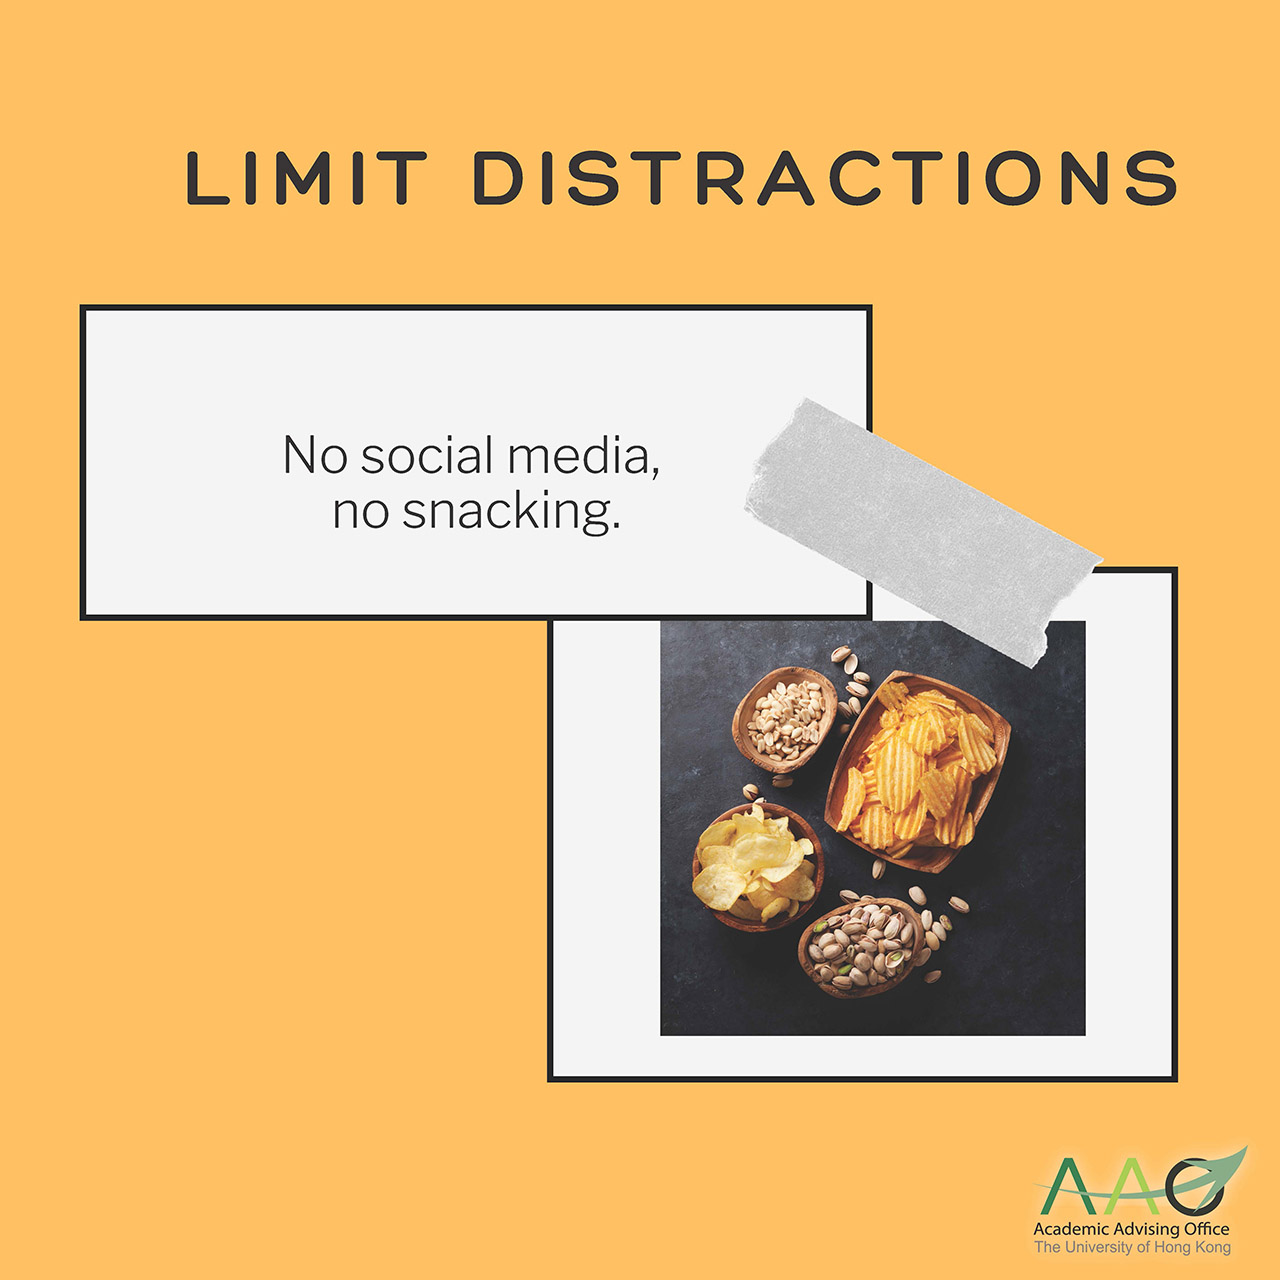 Limit distractions. No social media, no snacking.